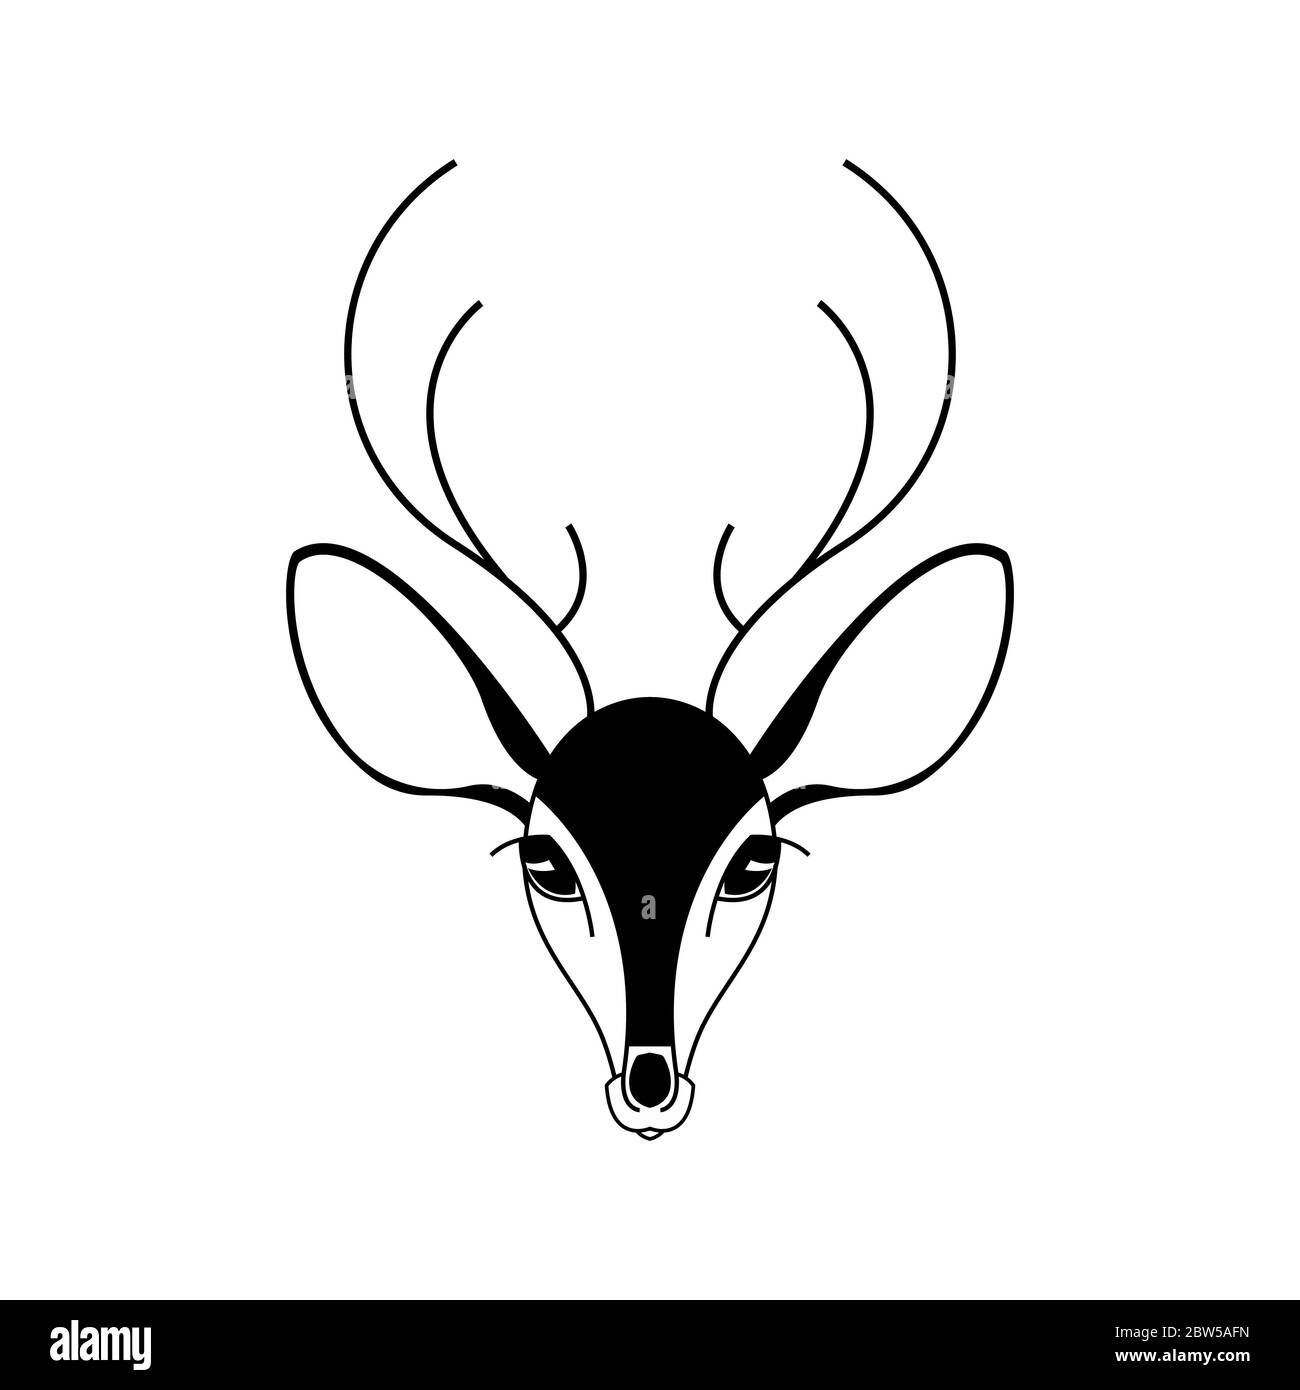 Realistic Black and White Deer Portrait Tattoo Drawing Stock Illustration -  Illustration of symbolism, design: 292888332